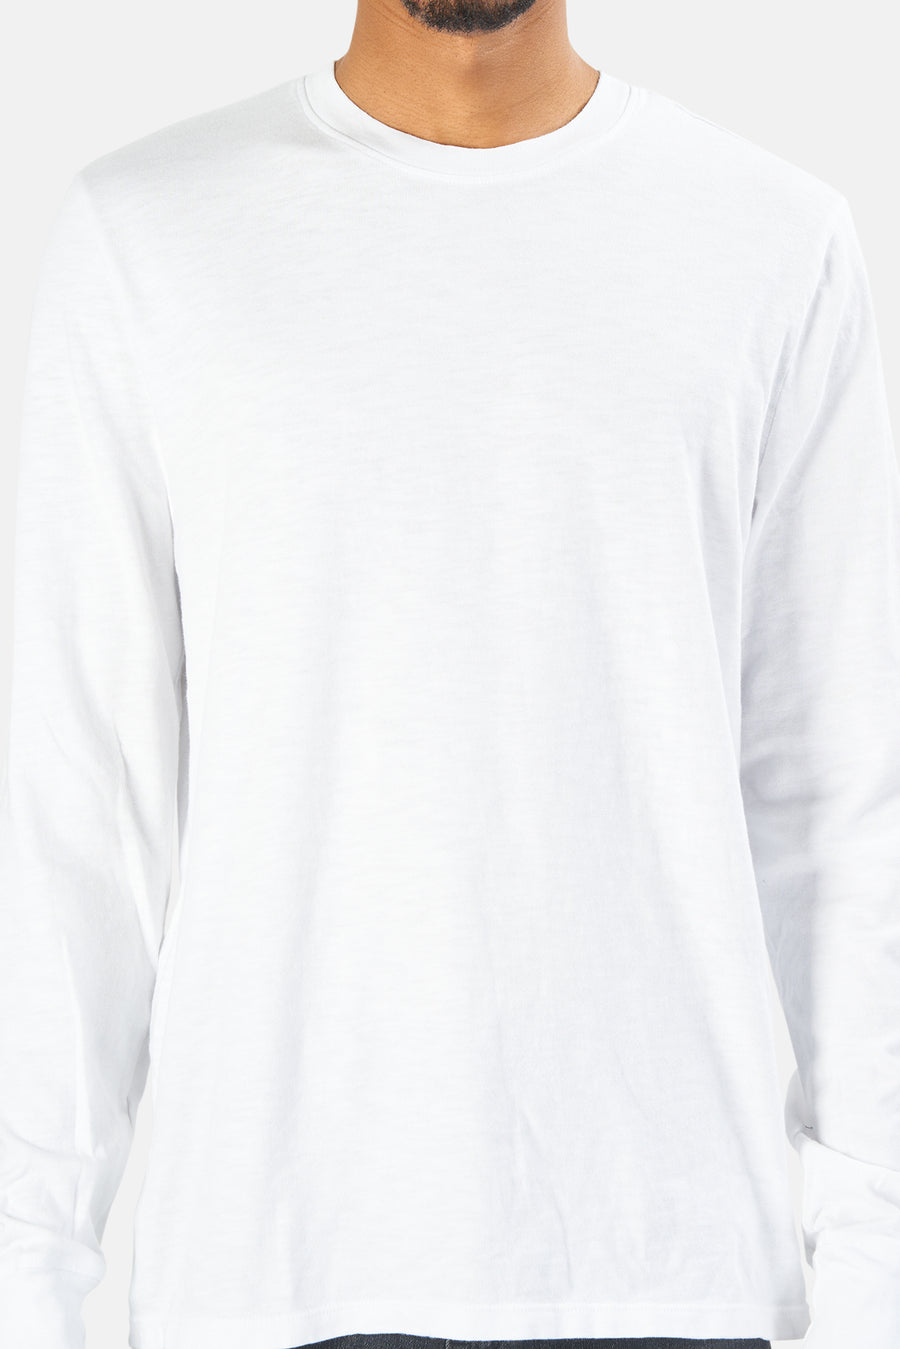 Presley Long Sleeve Shirt White - blueandcream